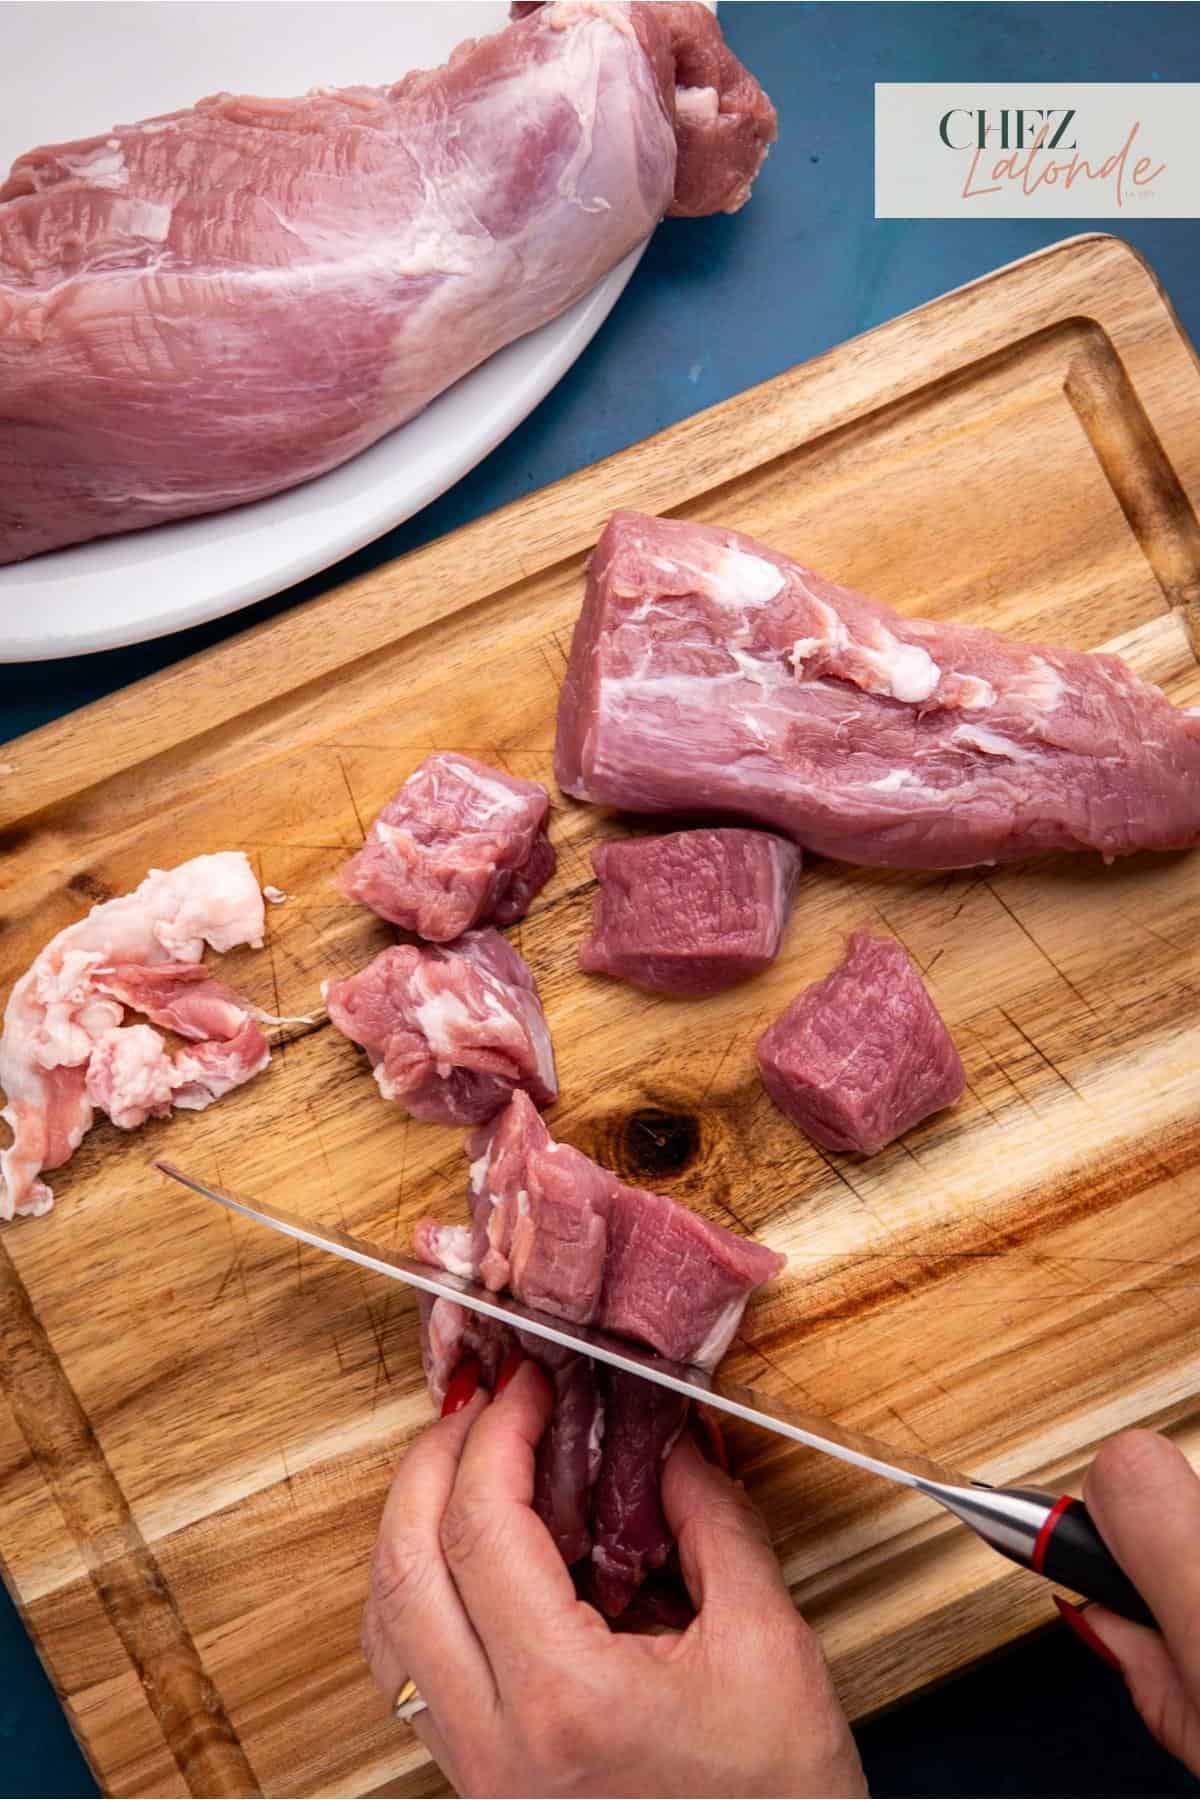 cutting the pork tenderloin in a 1.5 by 1.5 inch cubes.